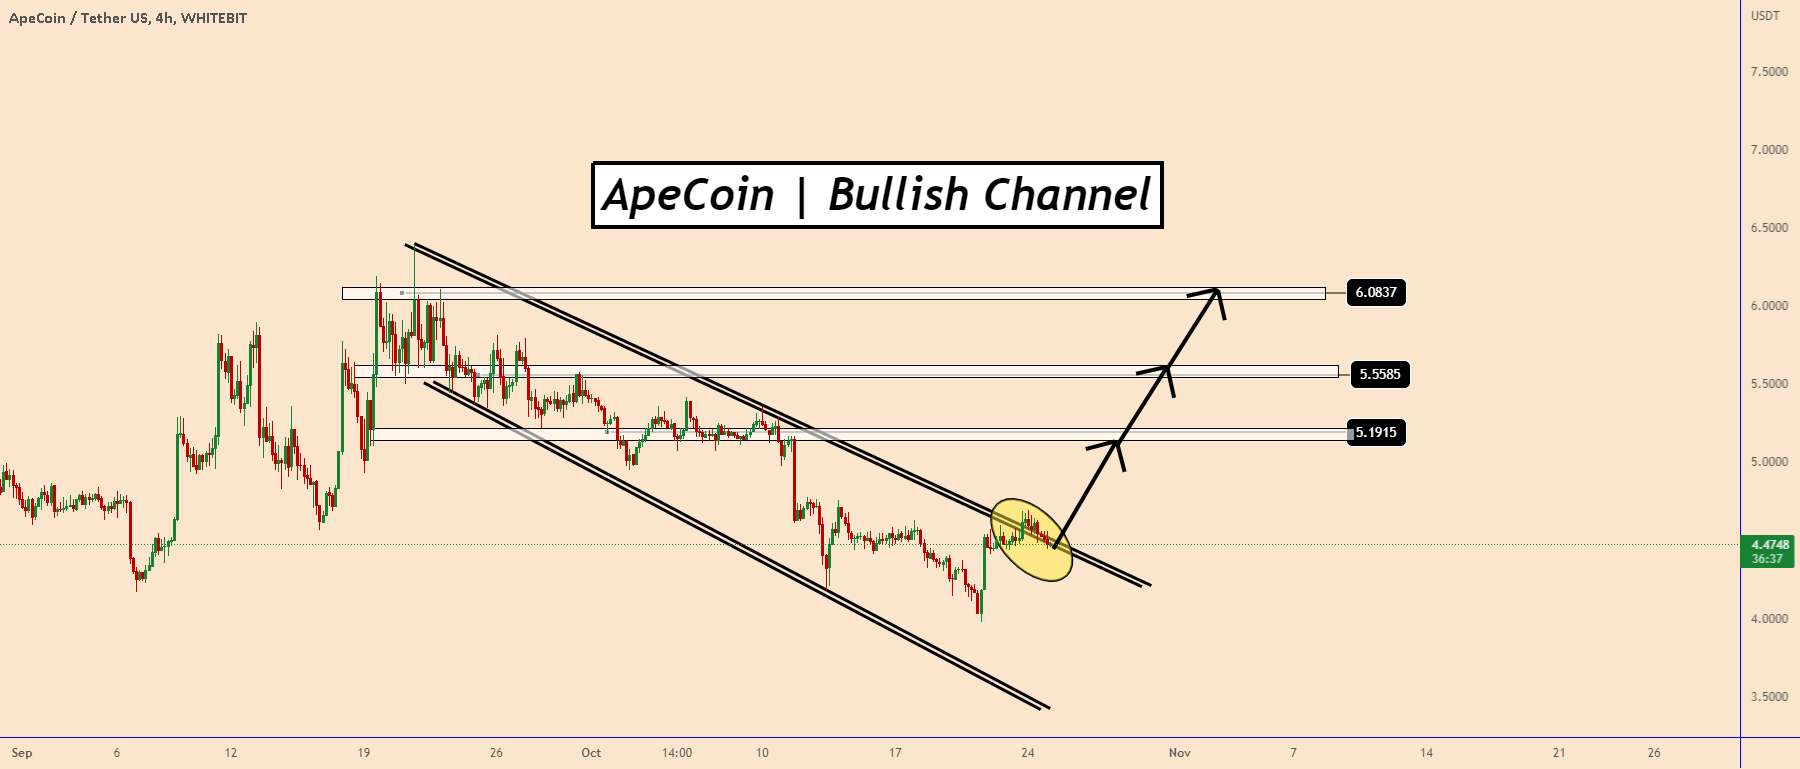 ApeCoin | کانال صعودی - قیمت ممکن است دوباره افزایش یابد - APE | برای افزایش بیشتر قیمت باید بالای 4.6 بماند